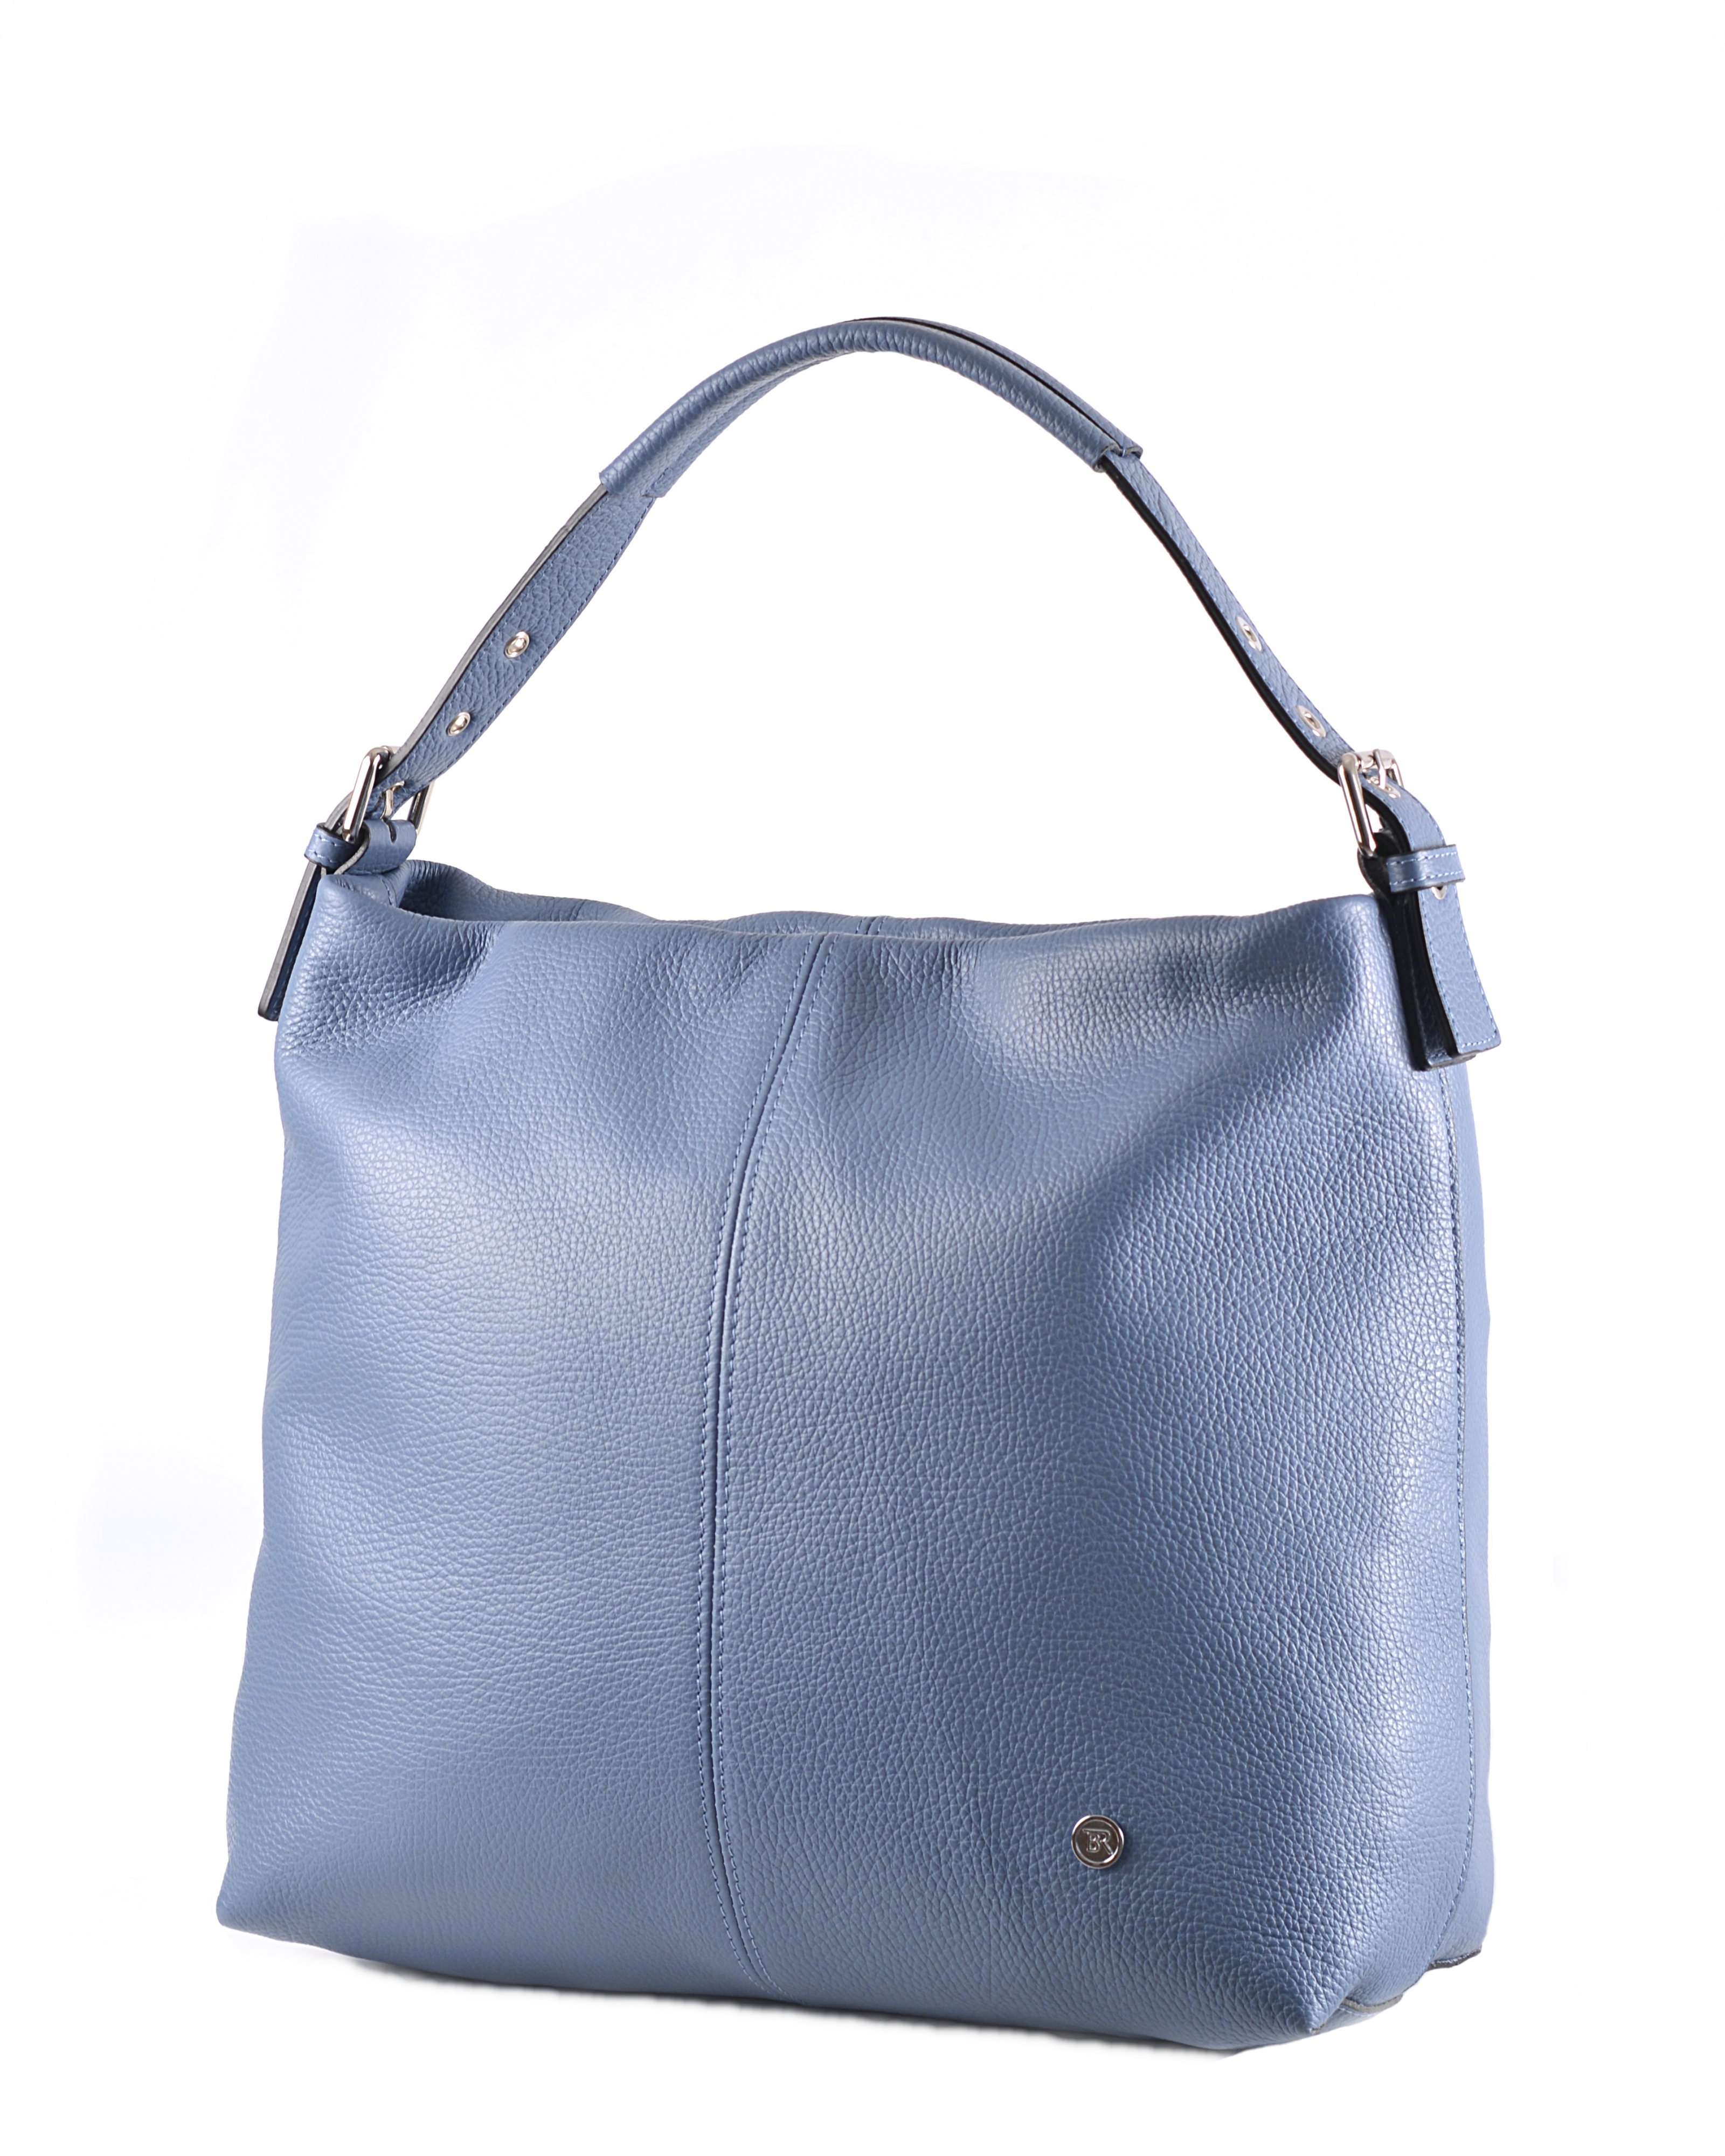 BRIGHT Dámská kožená kabelka přes rameno A4 Modrošedá, 30 x 12 x 23 (BR19-ANP8080-71DOL)